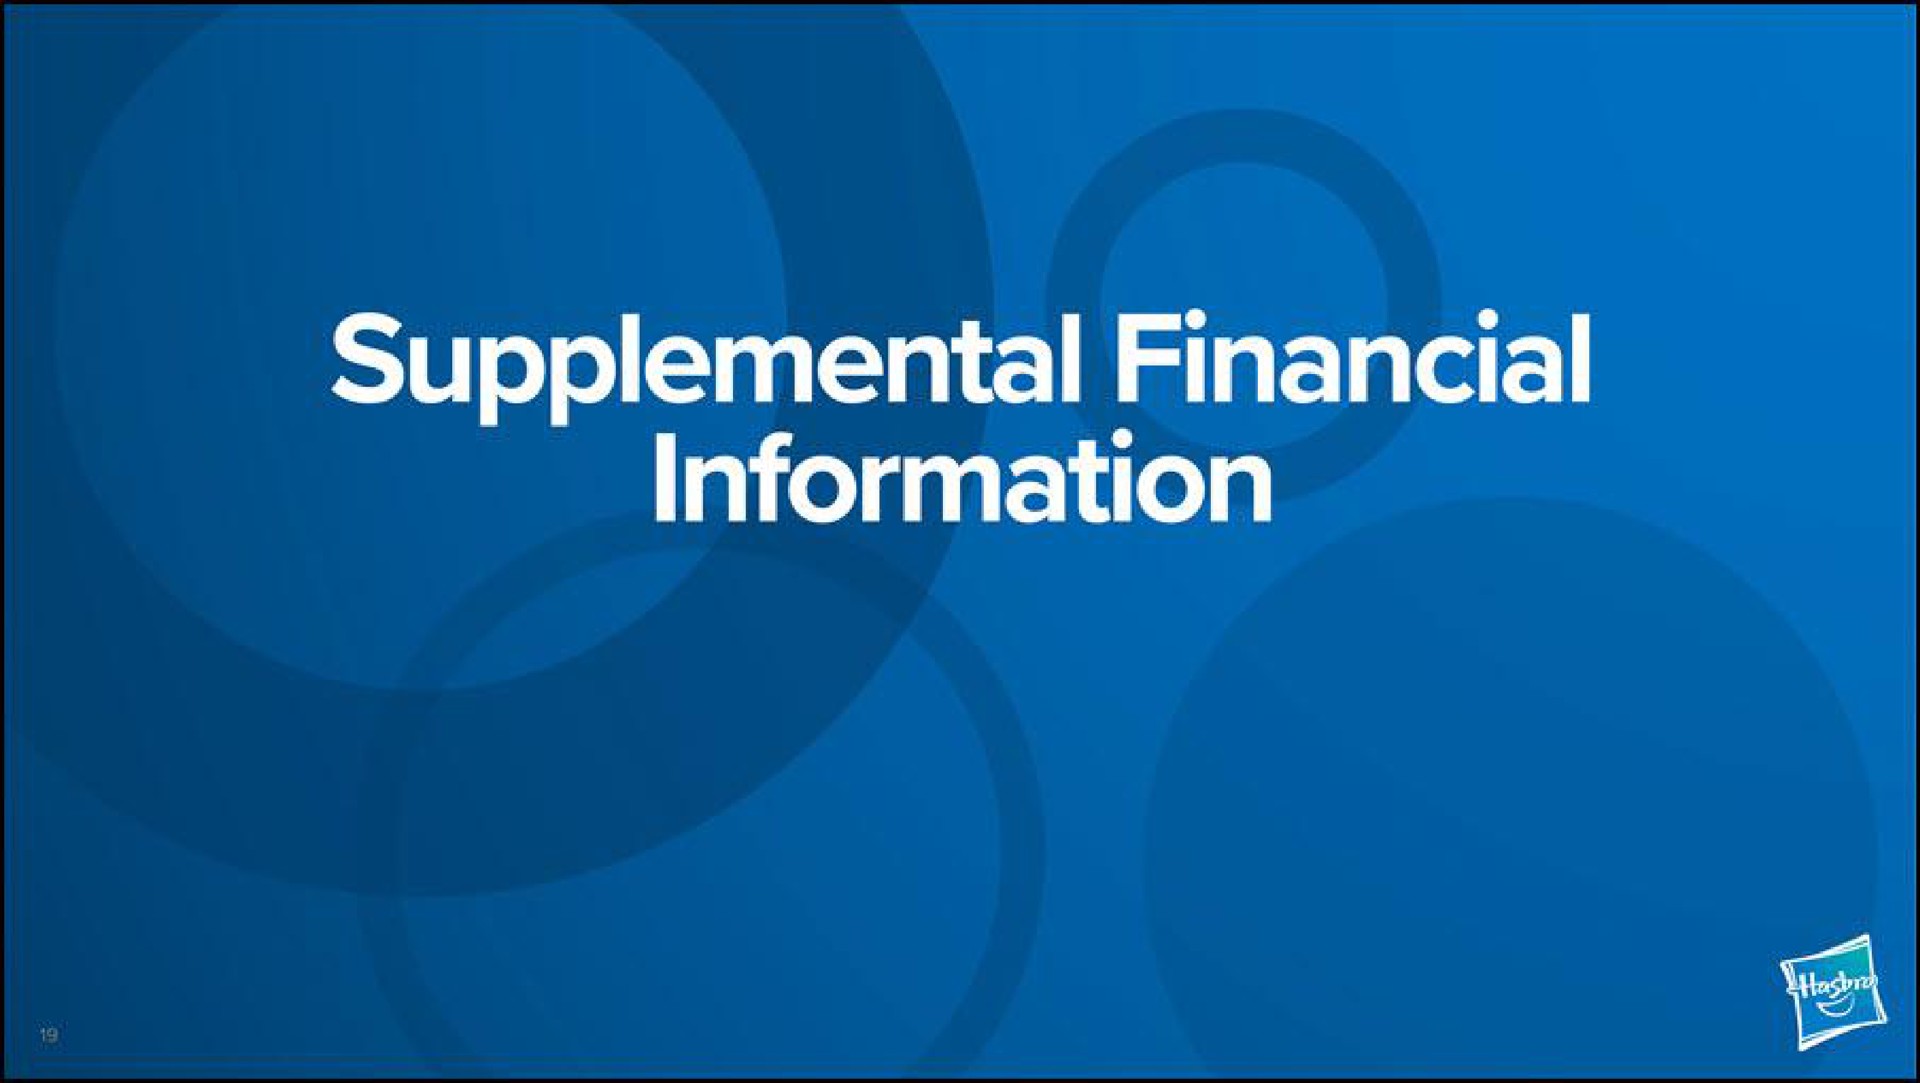 supplemental financial information | Hasbro